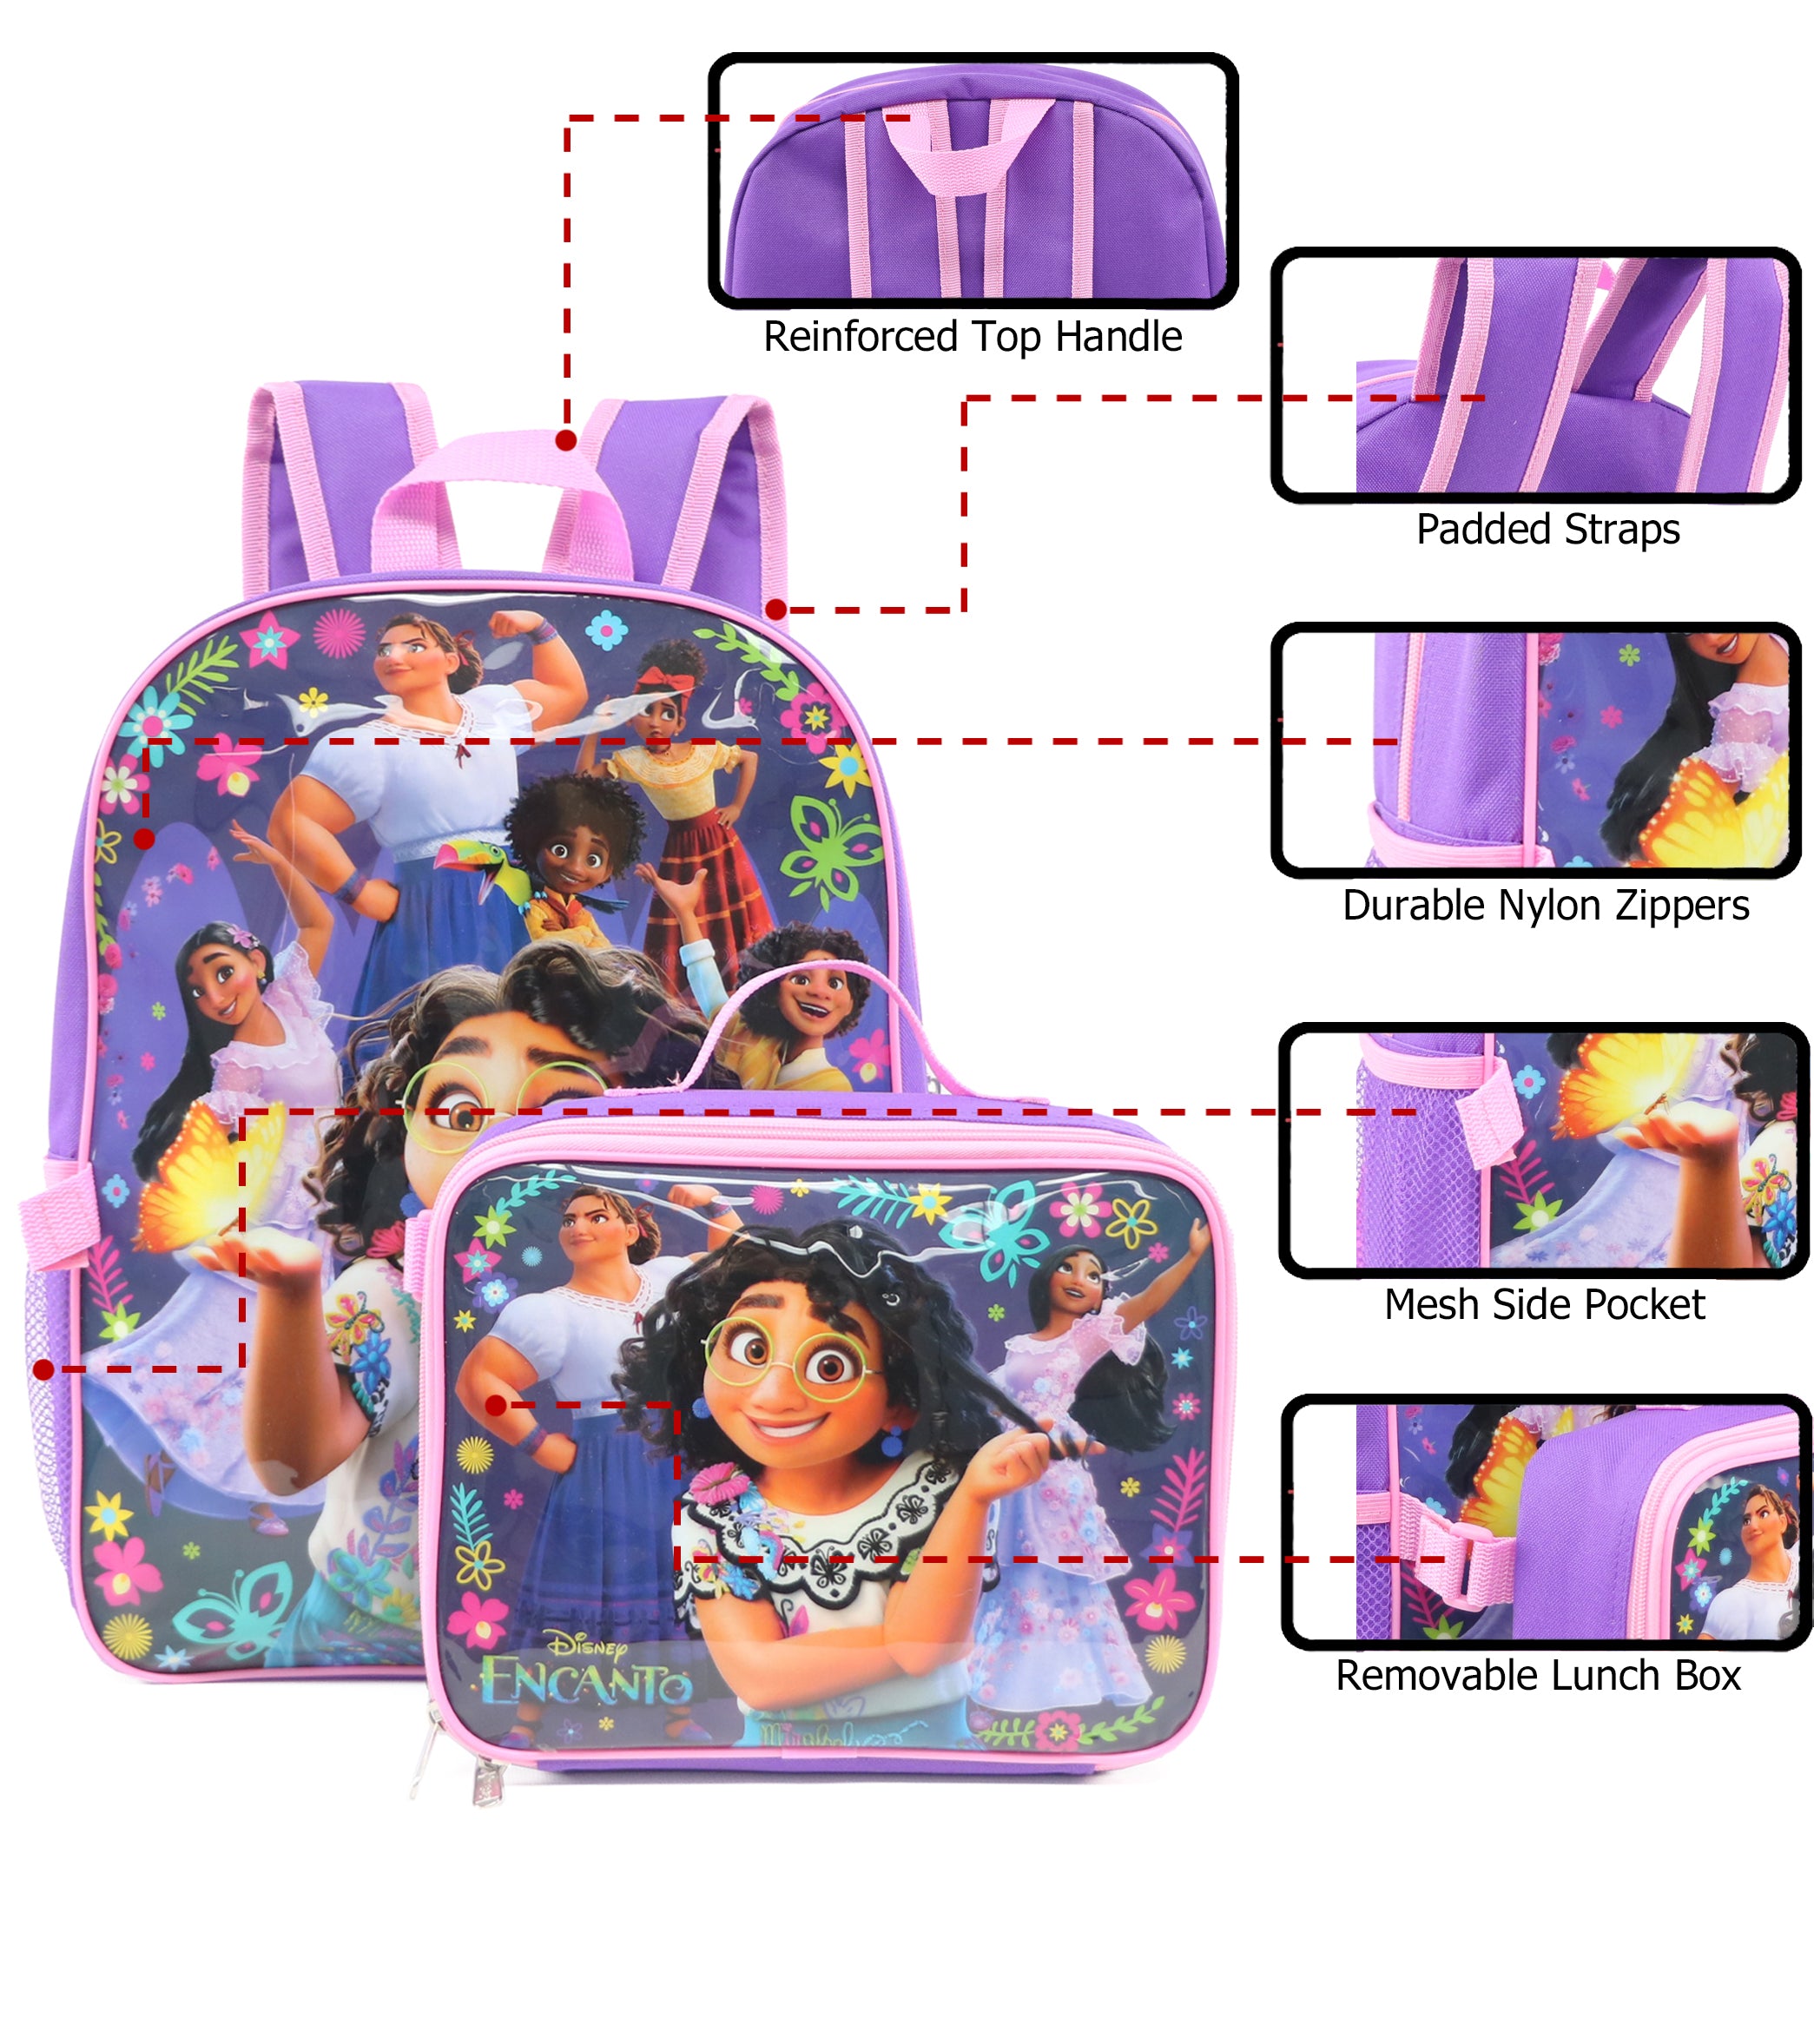 Disney Princess Girls School Backpack Lunch Box Book Bag SET Pink